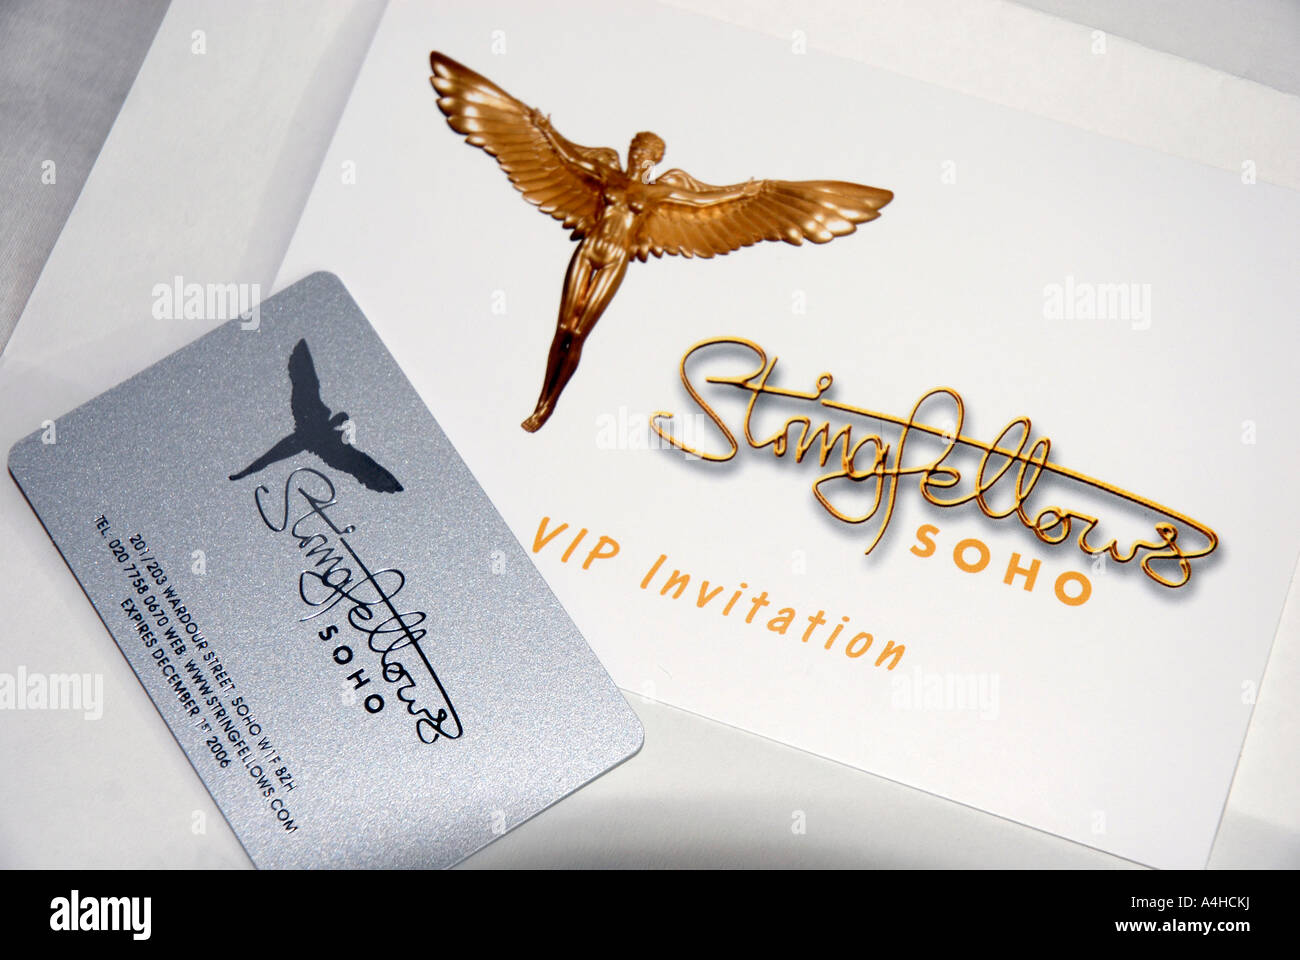 Stringfellows logo invitation card Stock Photo